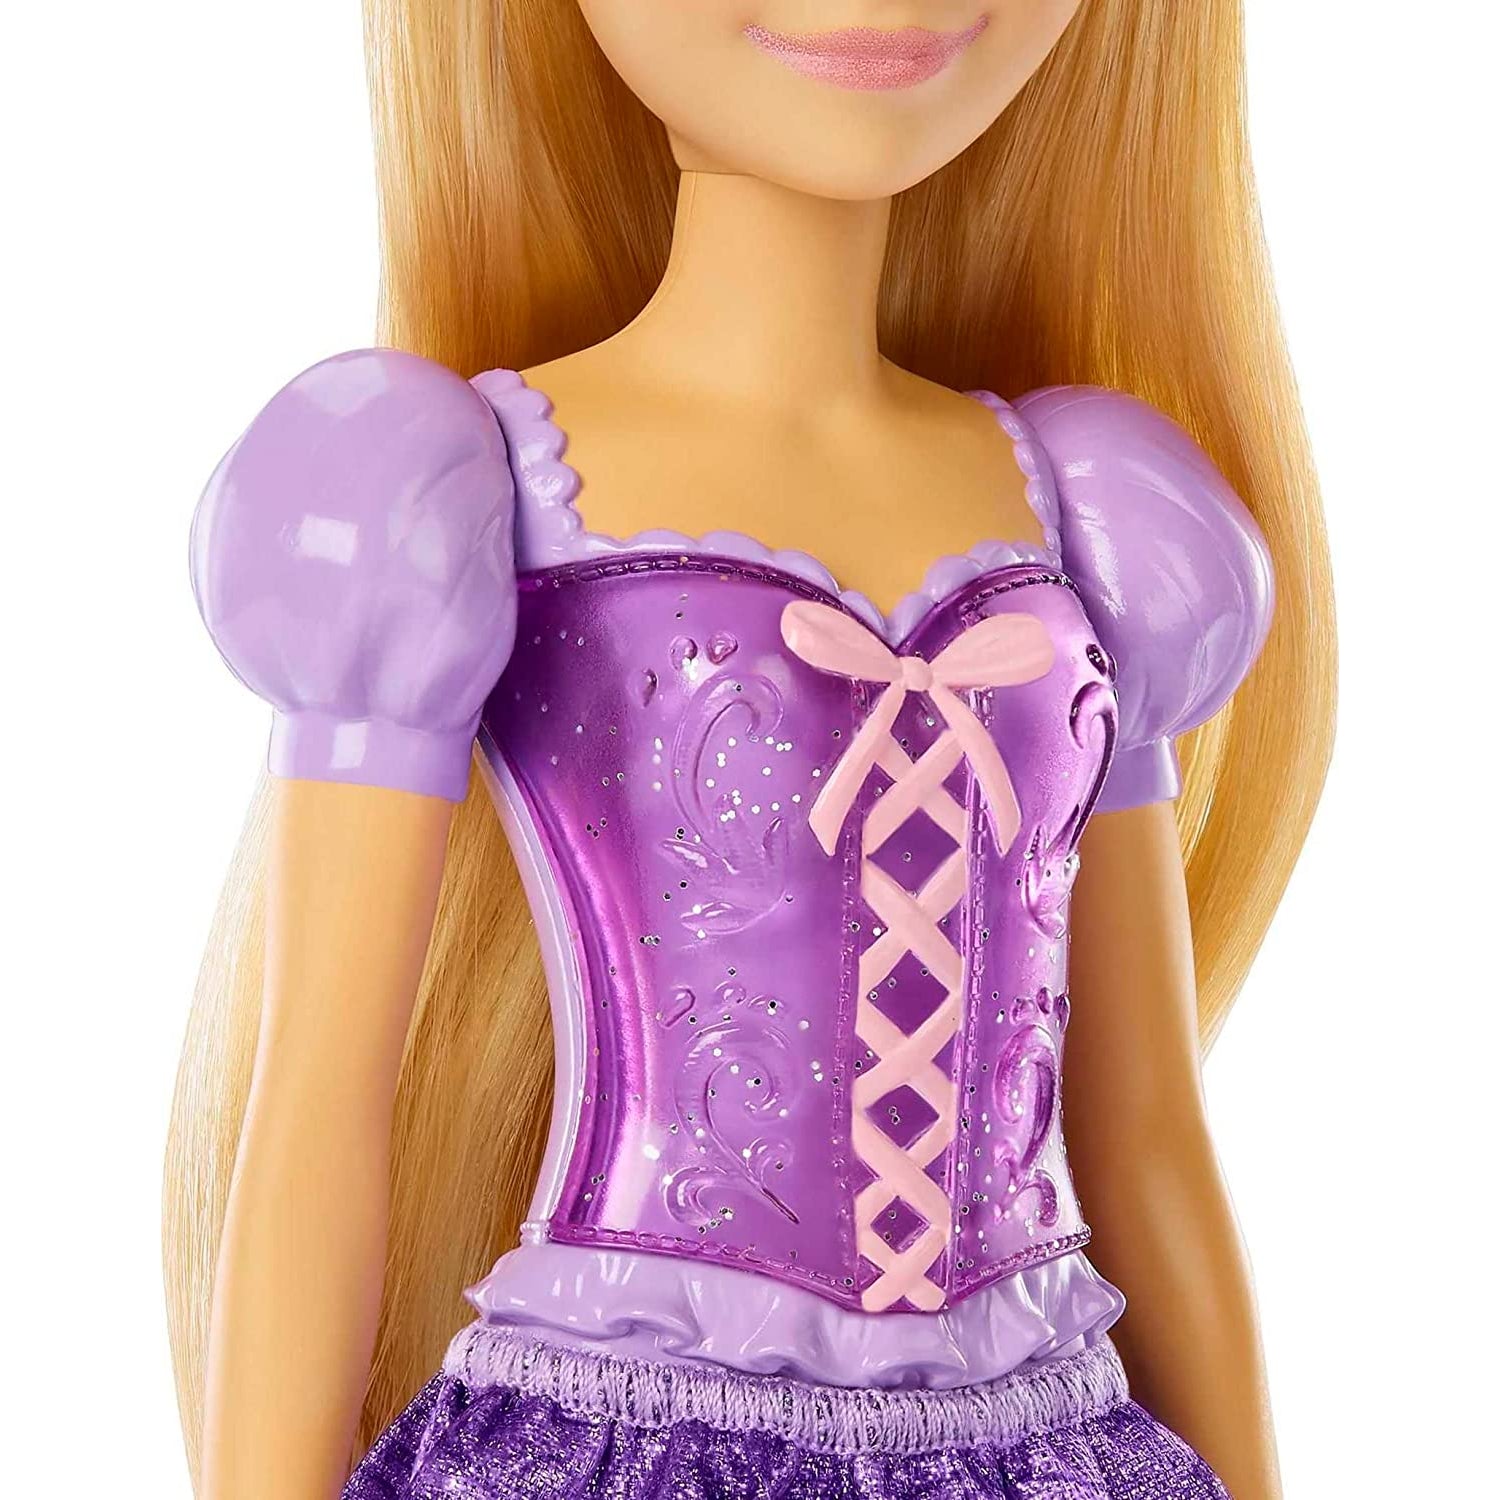 Disney Princess So Sweet Princess Tiana 12.5-inch Plush Doll